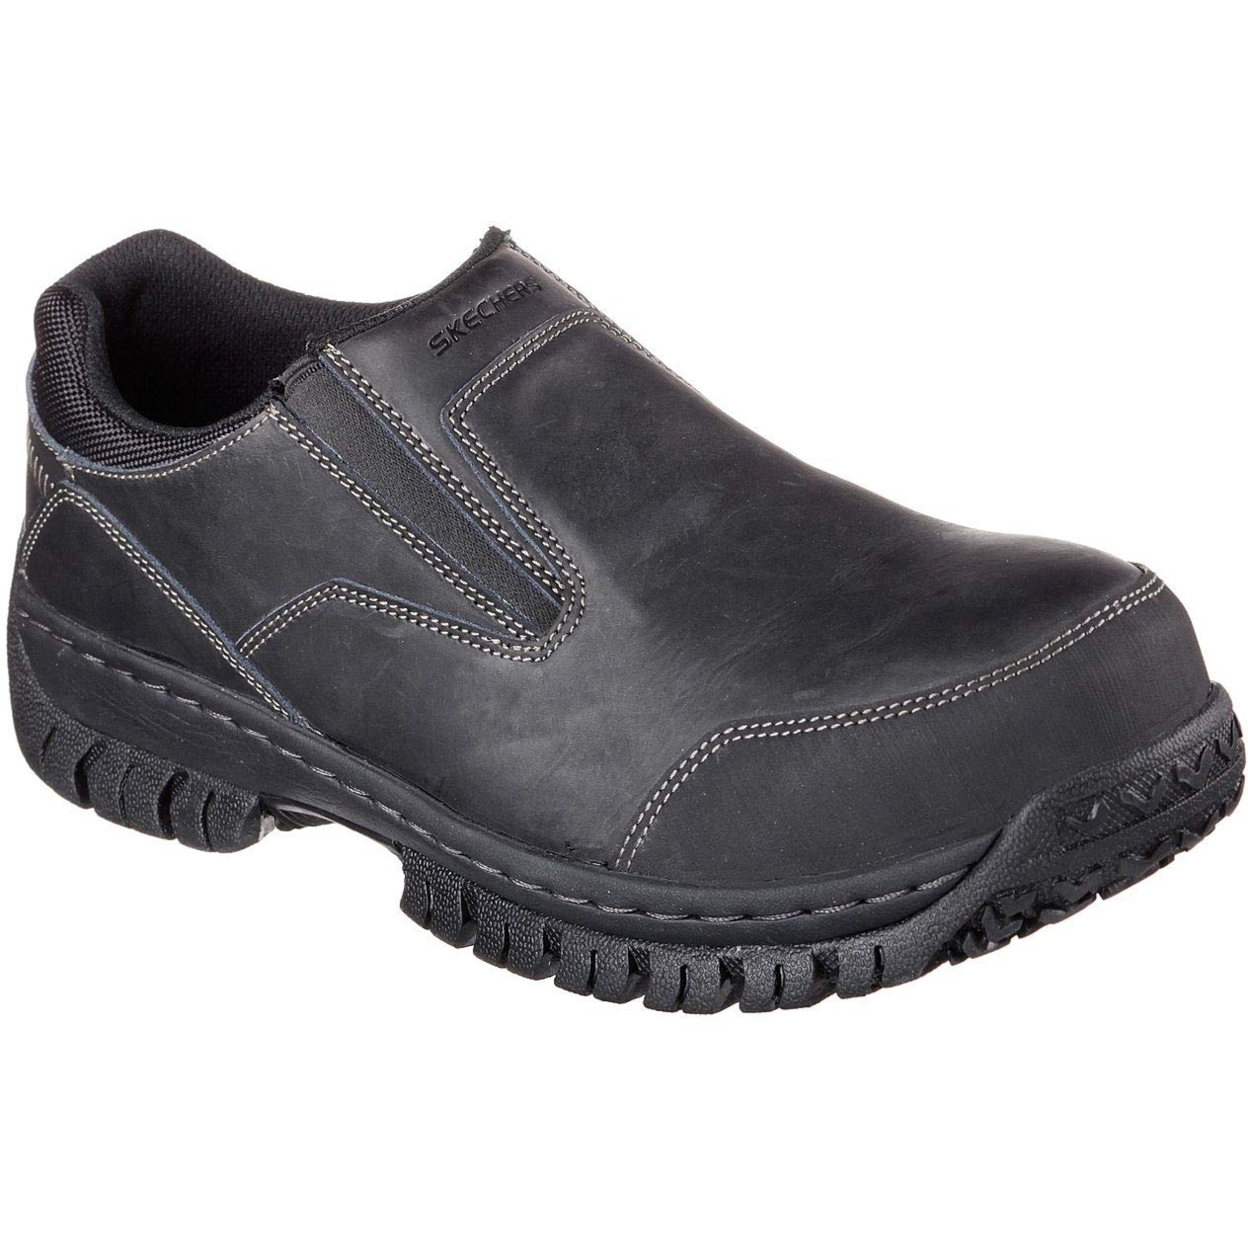 Skechers For Work Men's Hartan Steel Toe Slip-On Shoe Varies BLACK - BLACK, 9